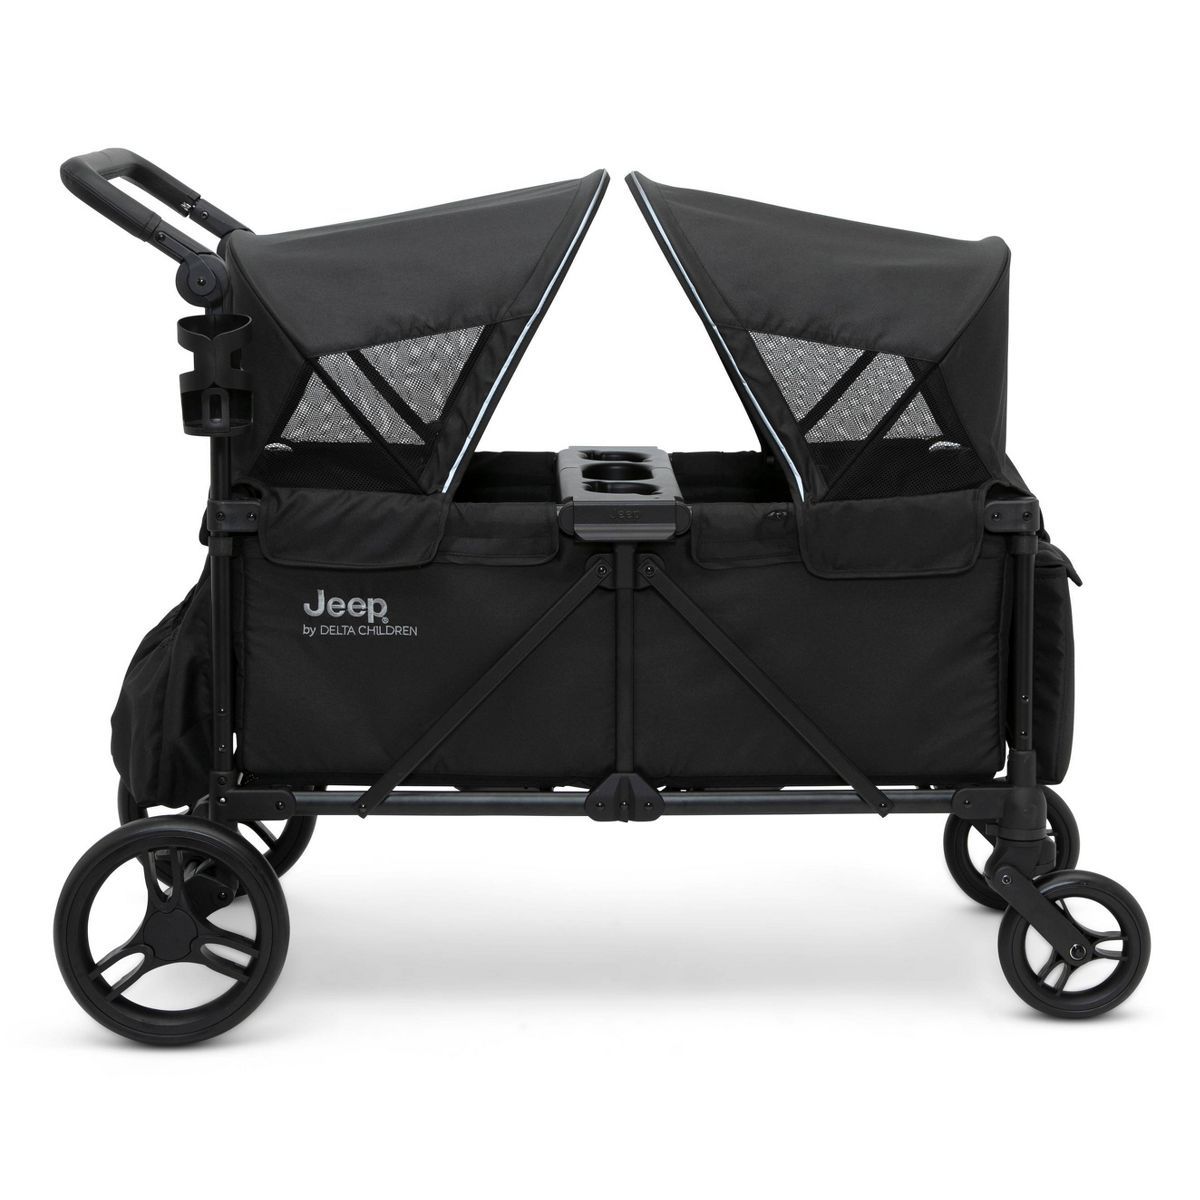 Jeep Evolve Stroller Wagon by Delta Children - Black | Target